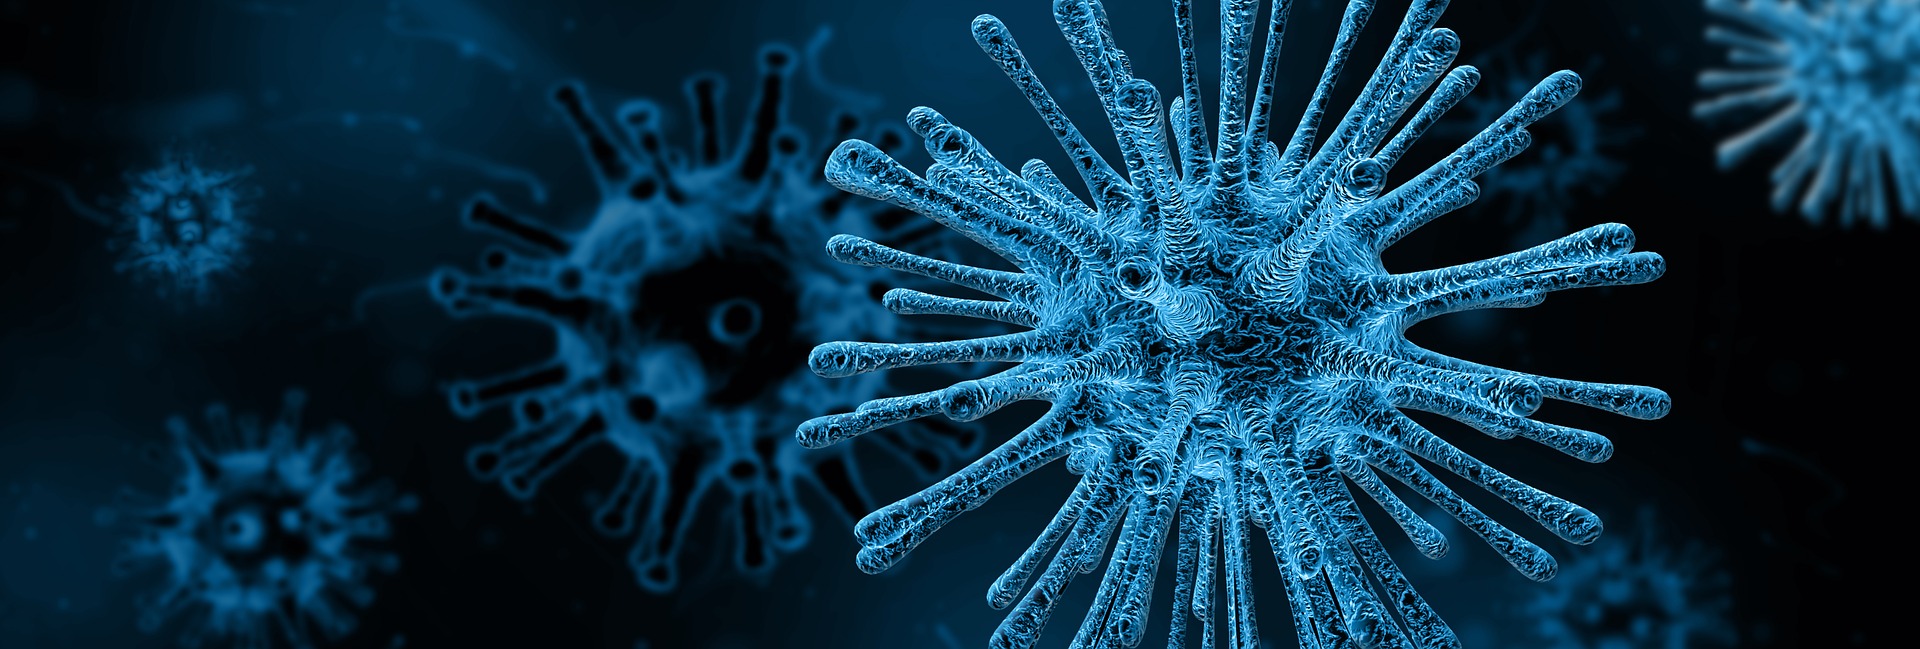 Bacterial, viral and fungal diseases